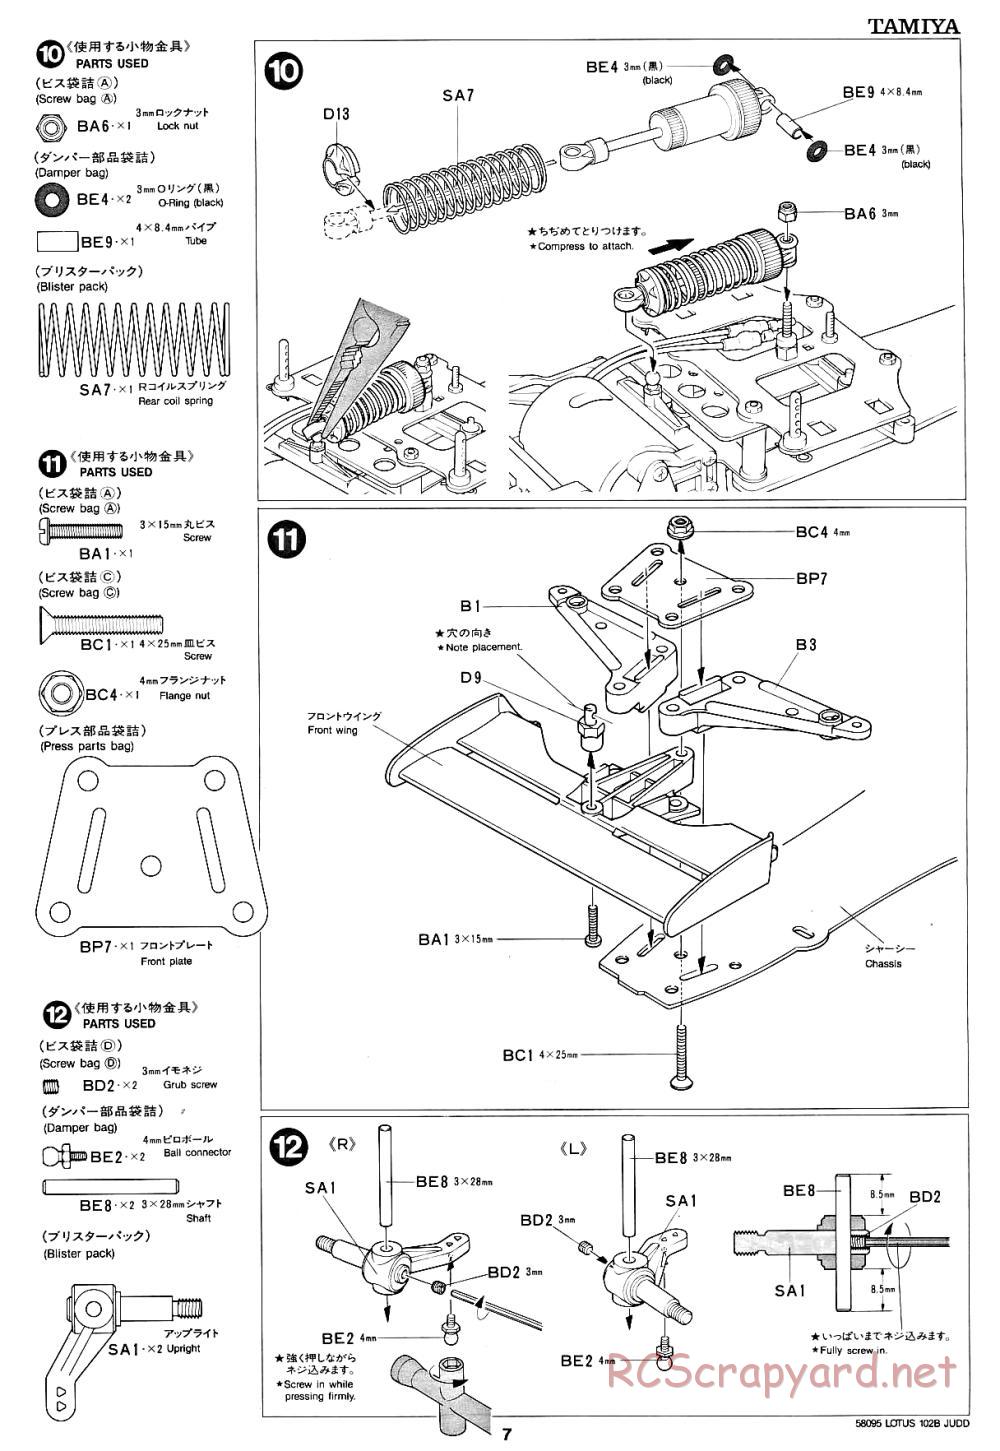 Tamiya - Lotus 102B Judd - 58095 - Manual - Page 7